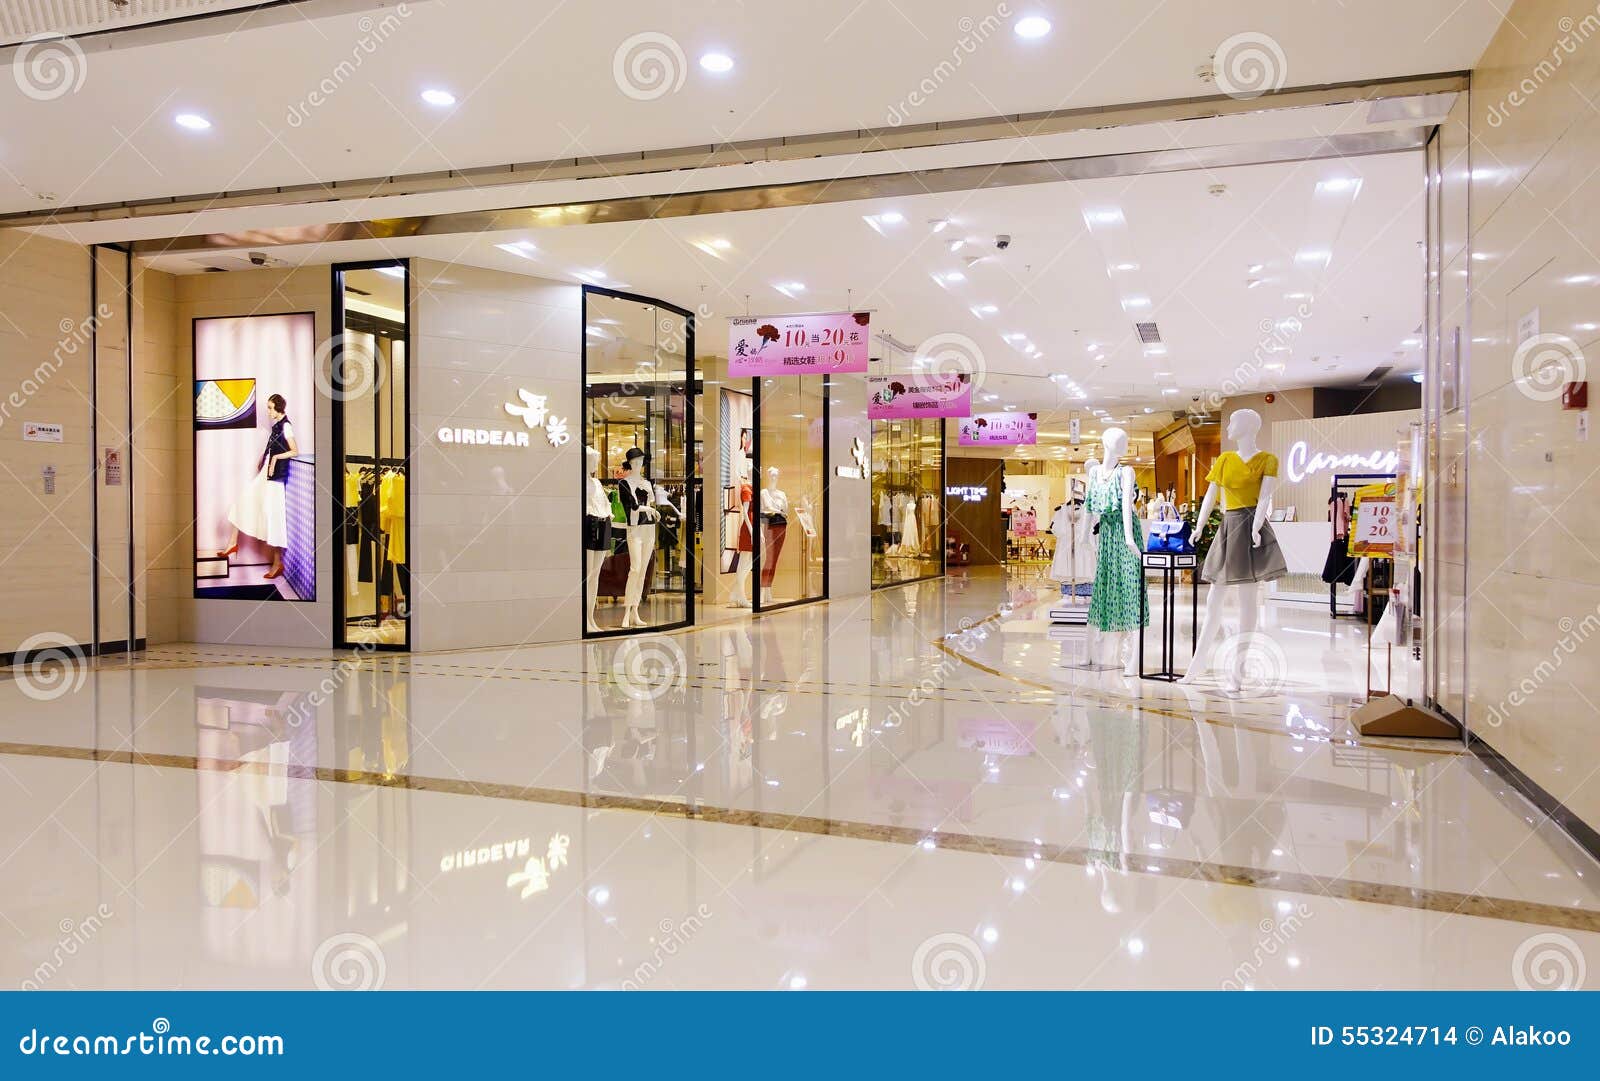 Shopping Mall Interior Designing Service